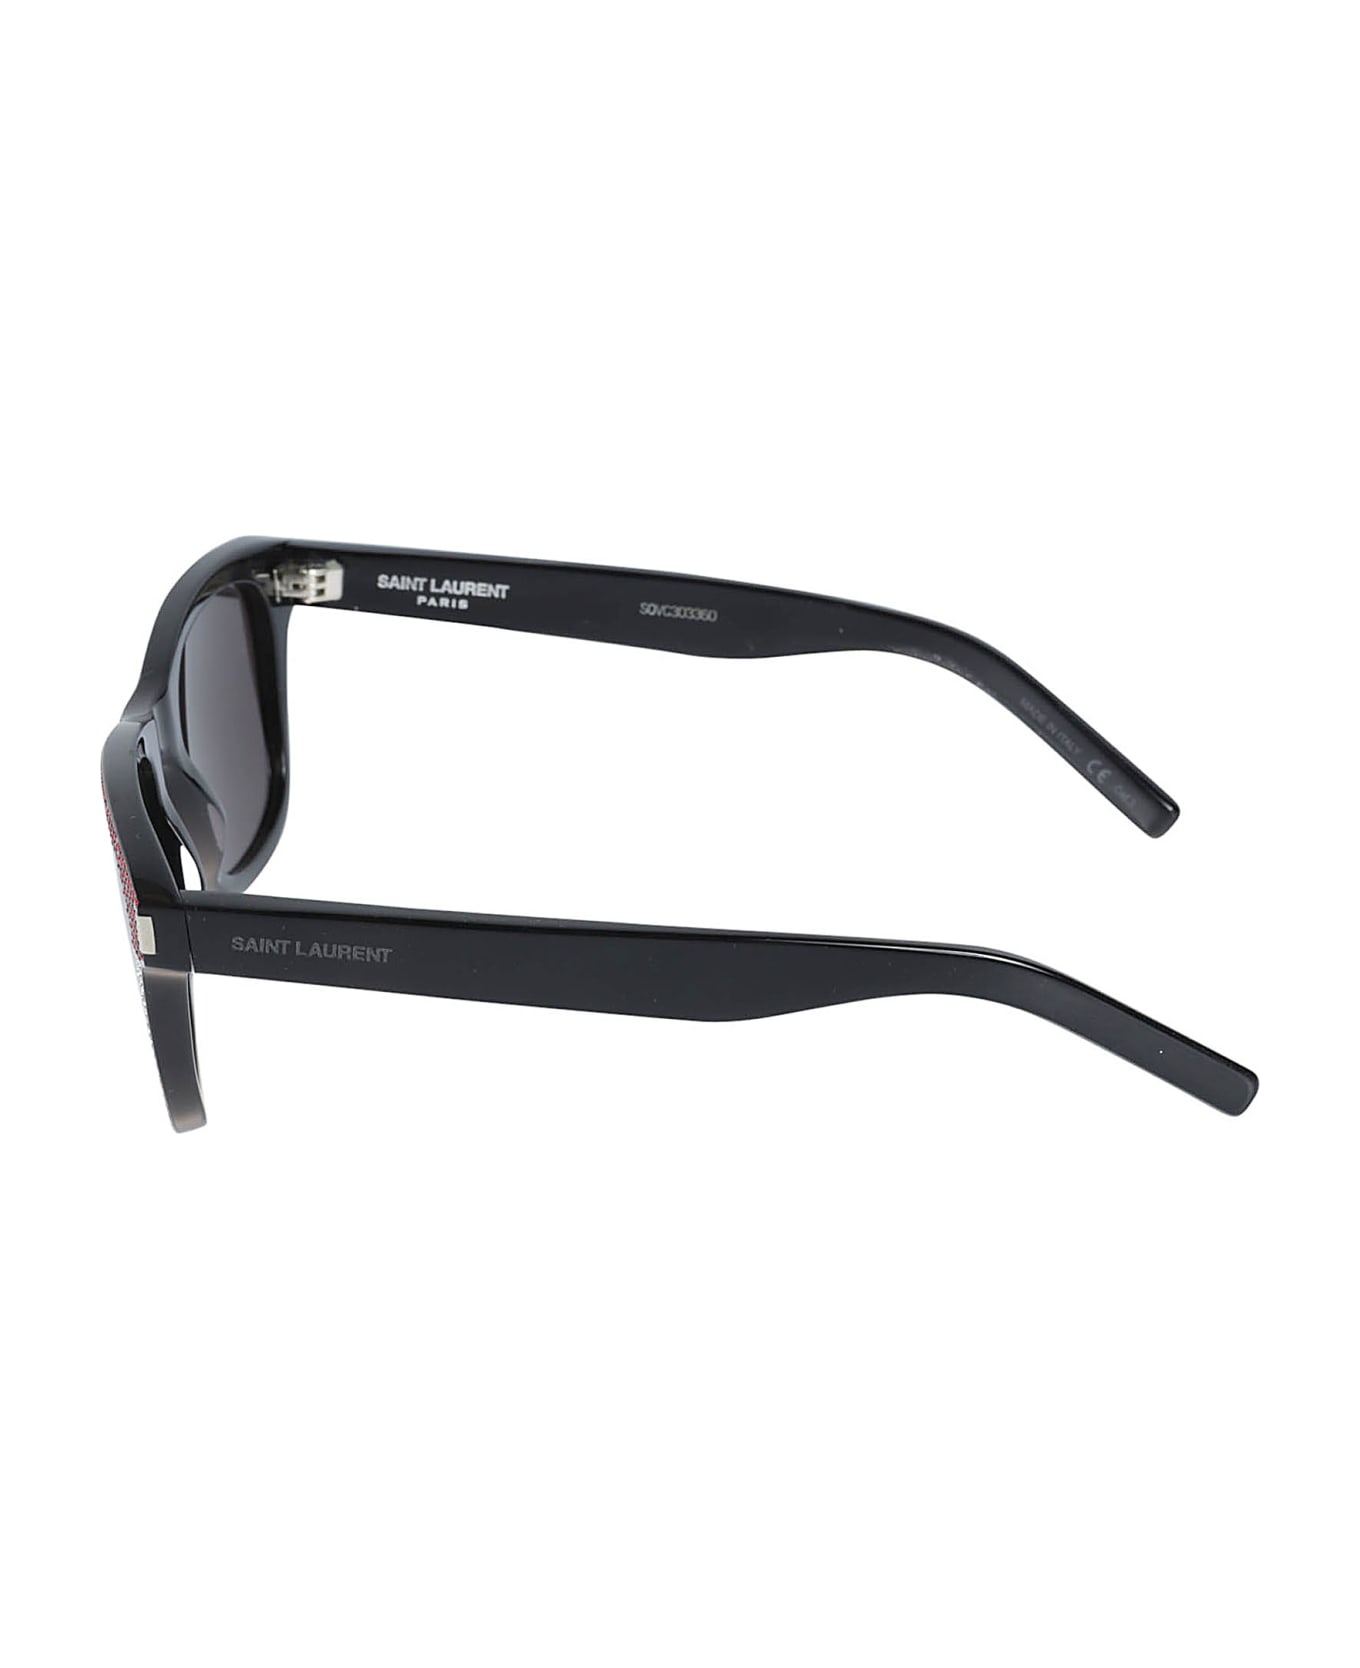 Saint Laurent Eyewear Square Frame Studded visor Sunglasses - Black/Grey